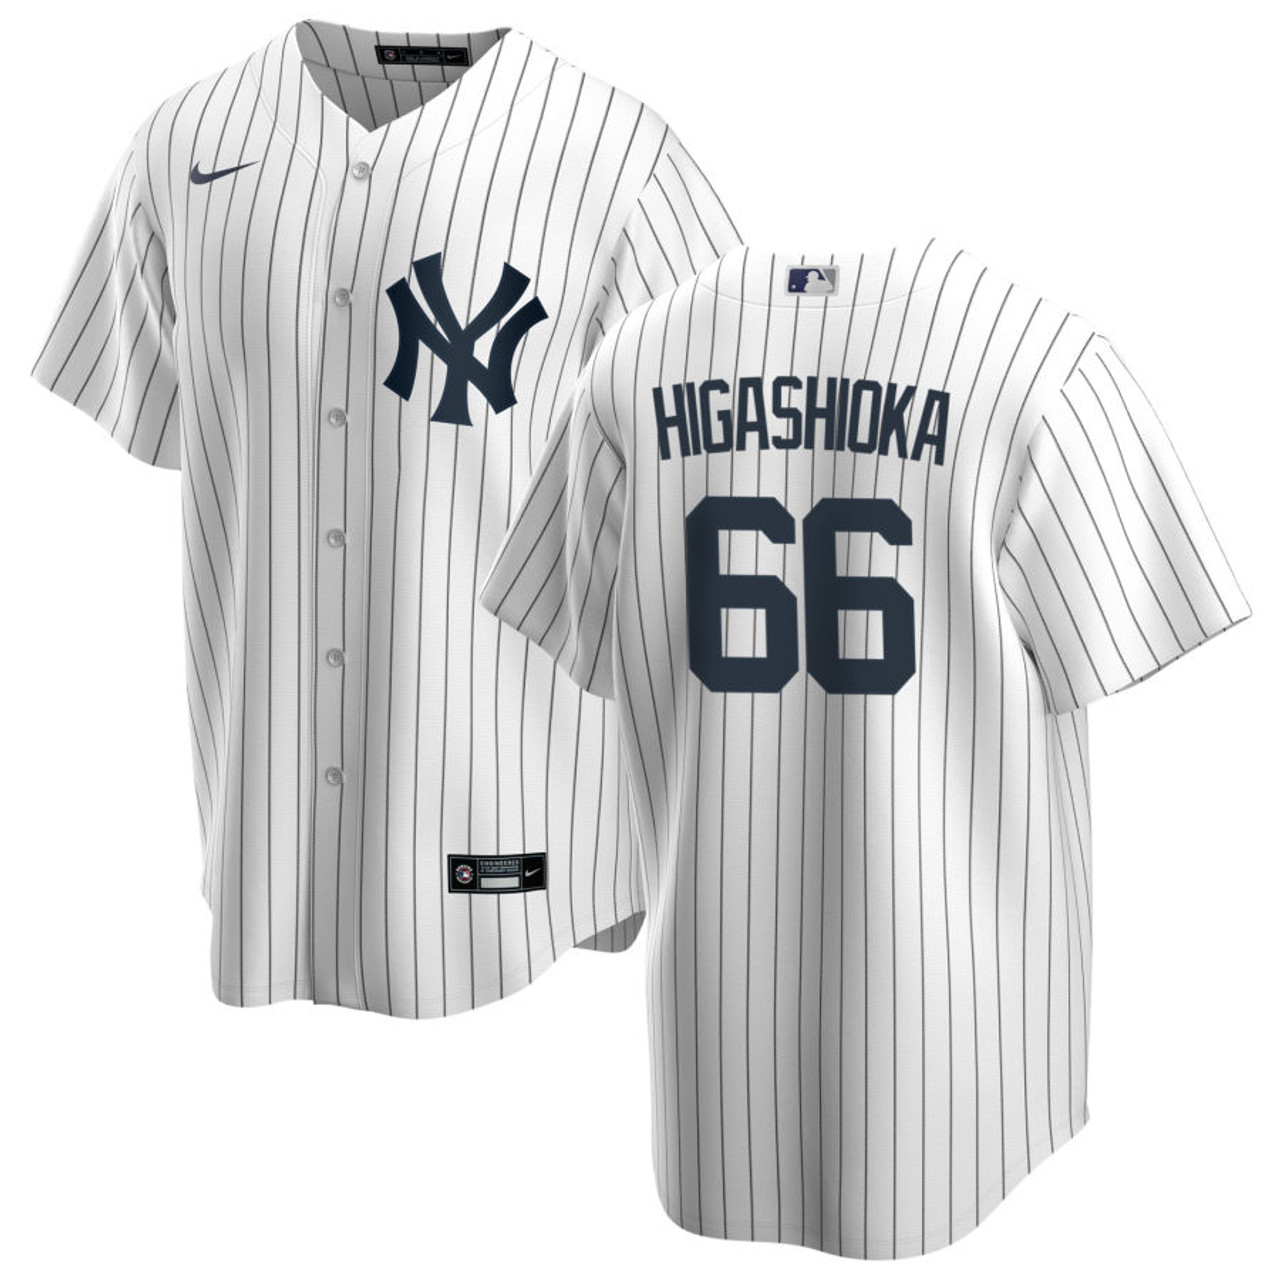 Kyle Higashioka Youth Jersey - NY Yankees Replica Kids Home Jersey